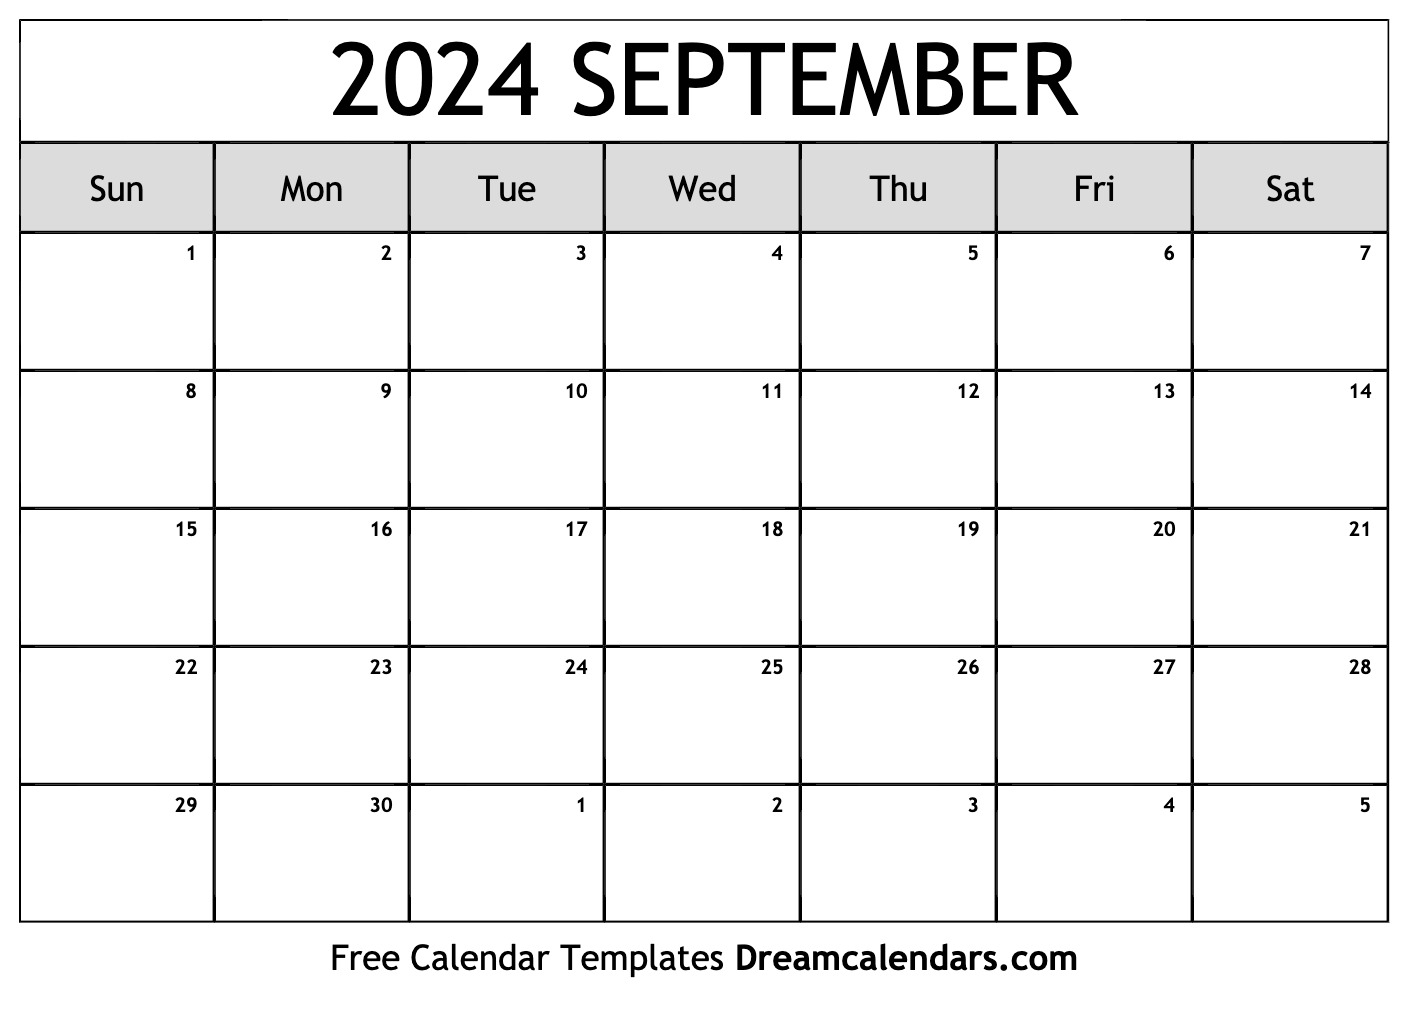 September 2024 Calendar | Free Blank Printable With Holidays for 2024 Calendar Printable September